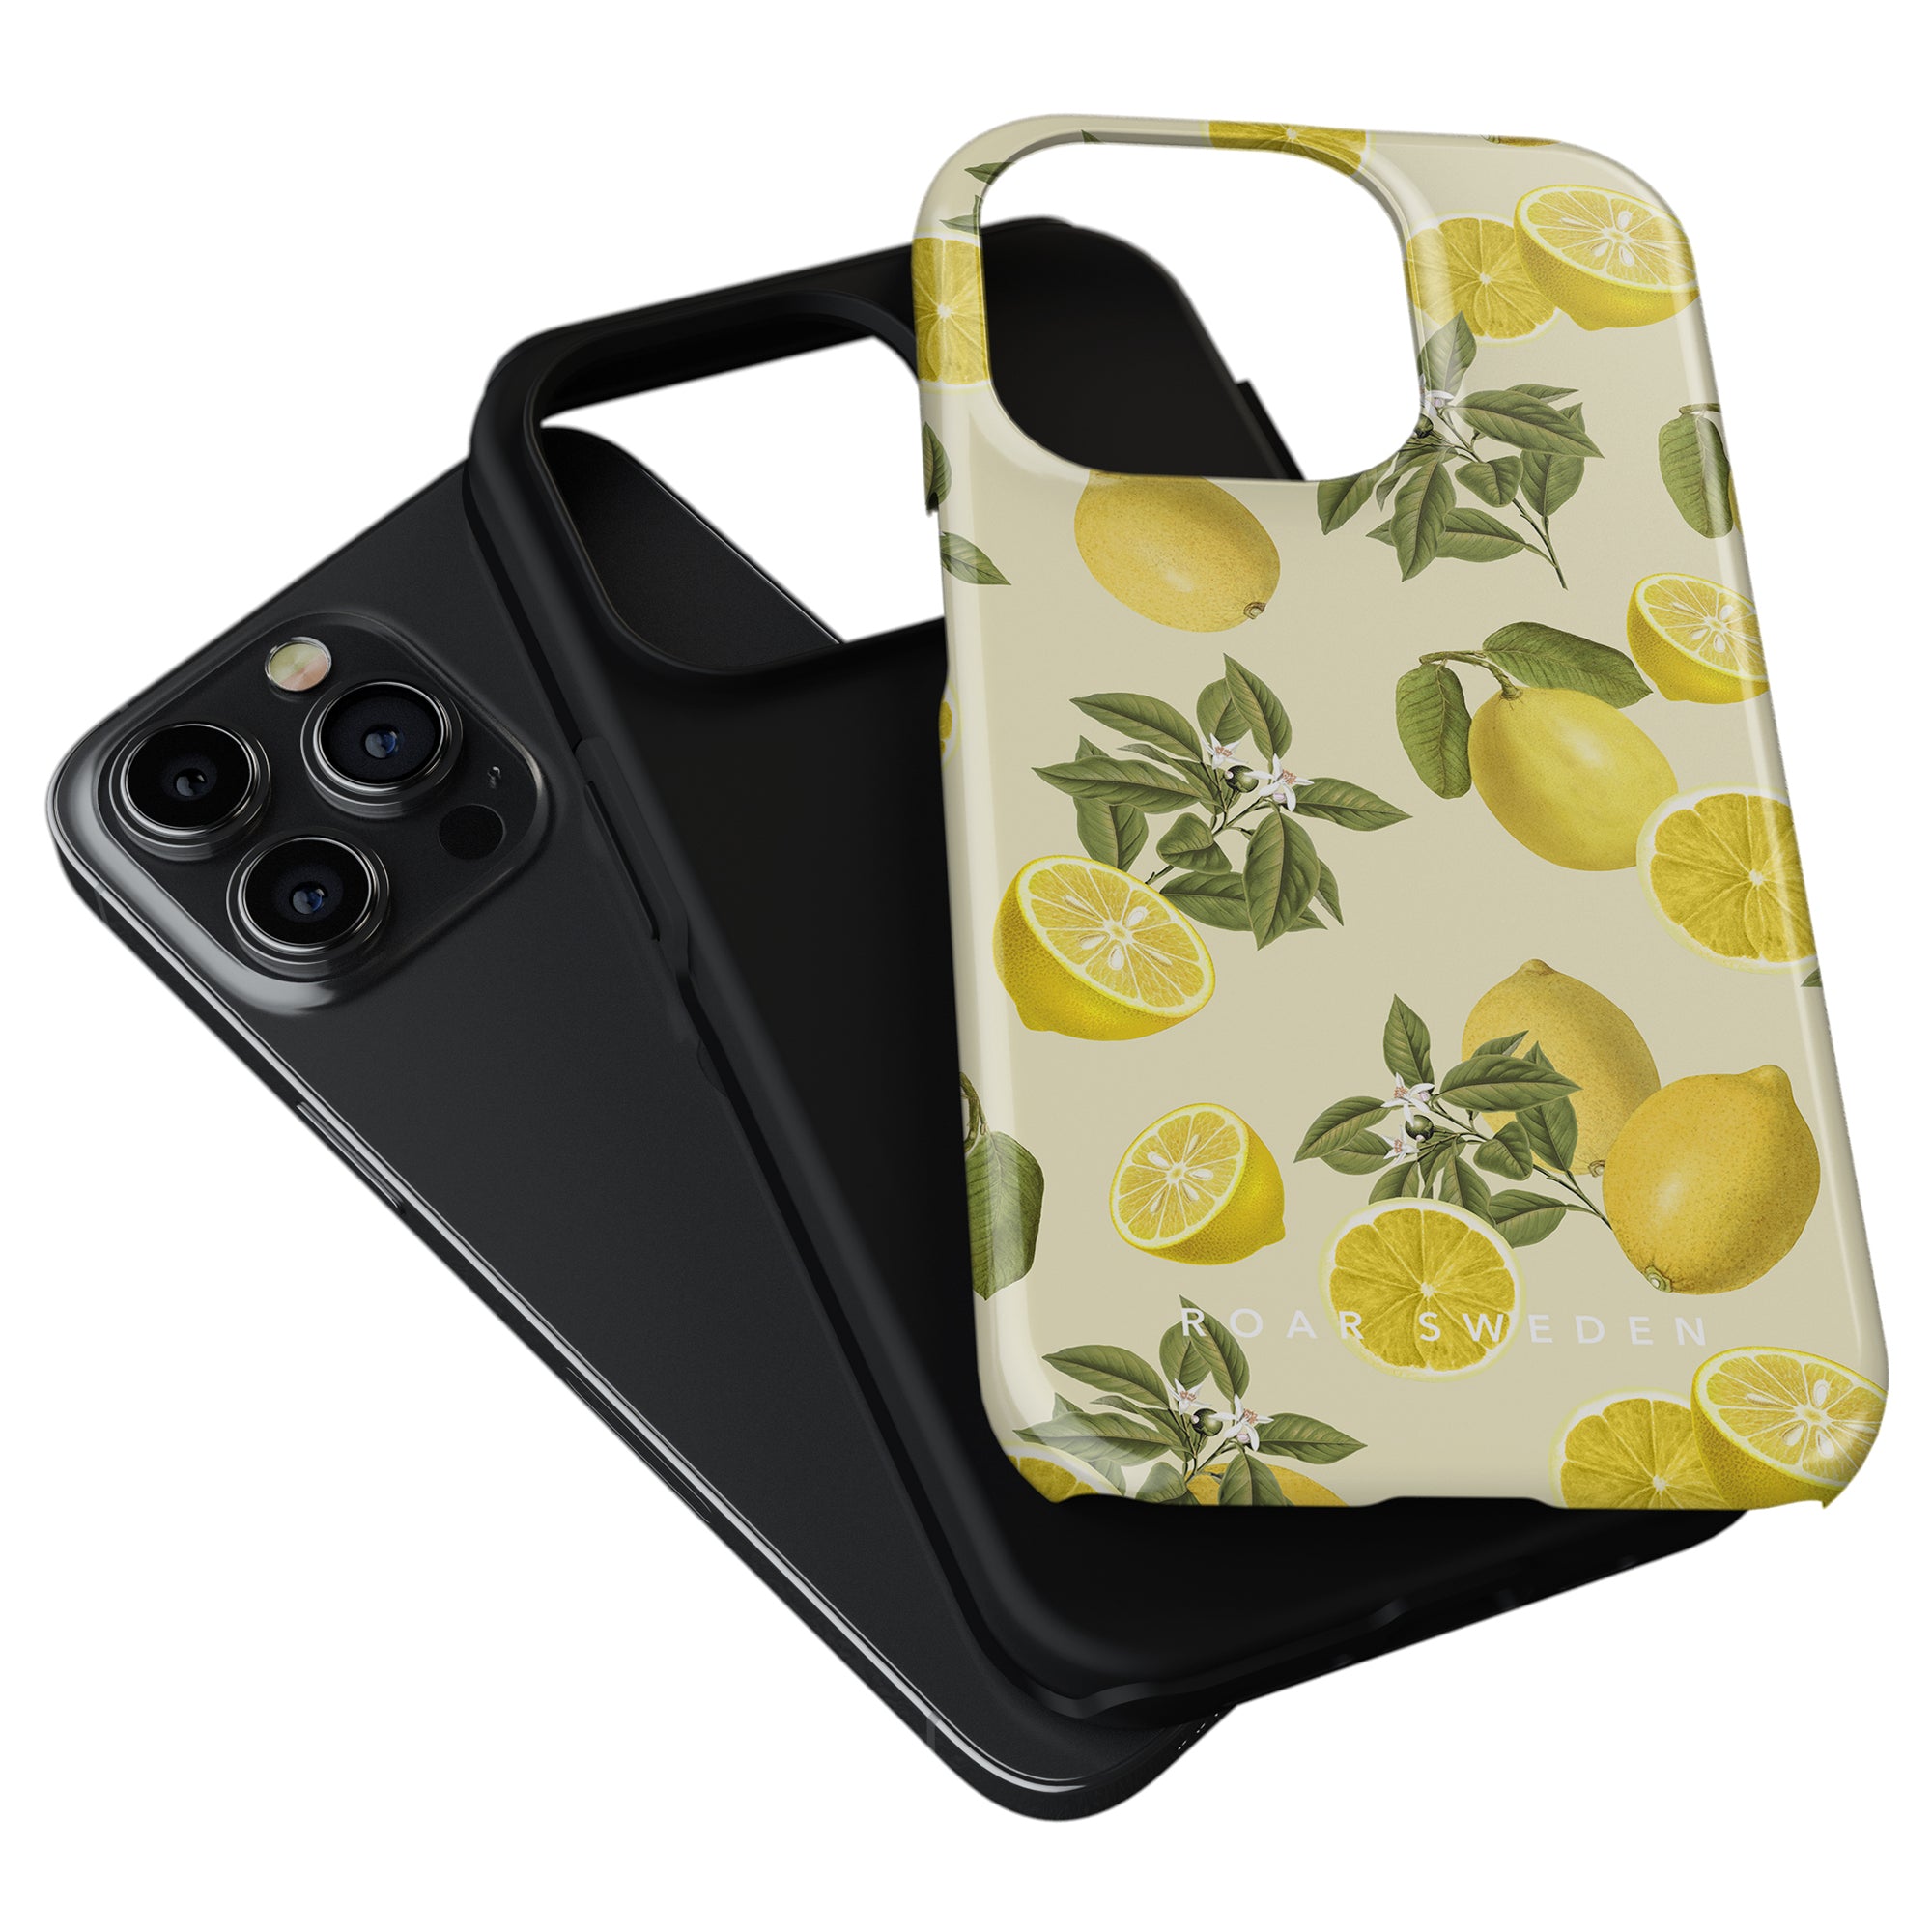 A smartphone with a triple-camera setup alongside a Limon - Tough Case protective cover.